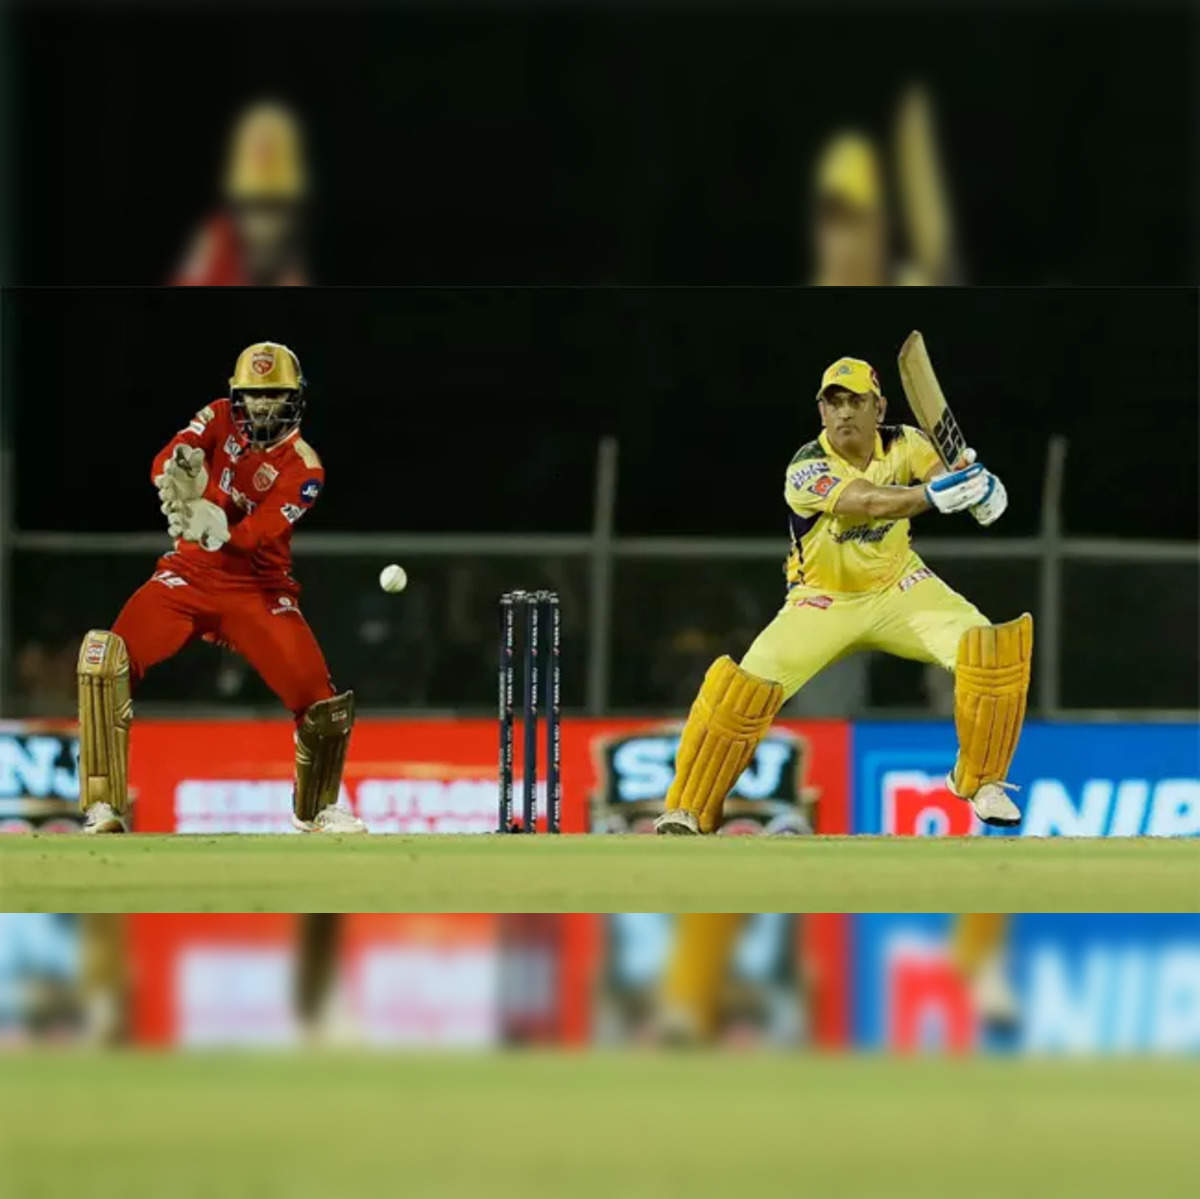 Who is the batsman in the IPL logo? - Quora